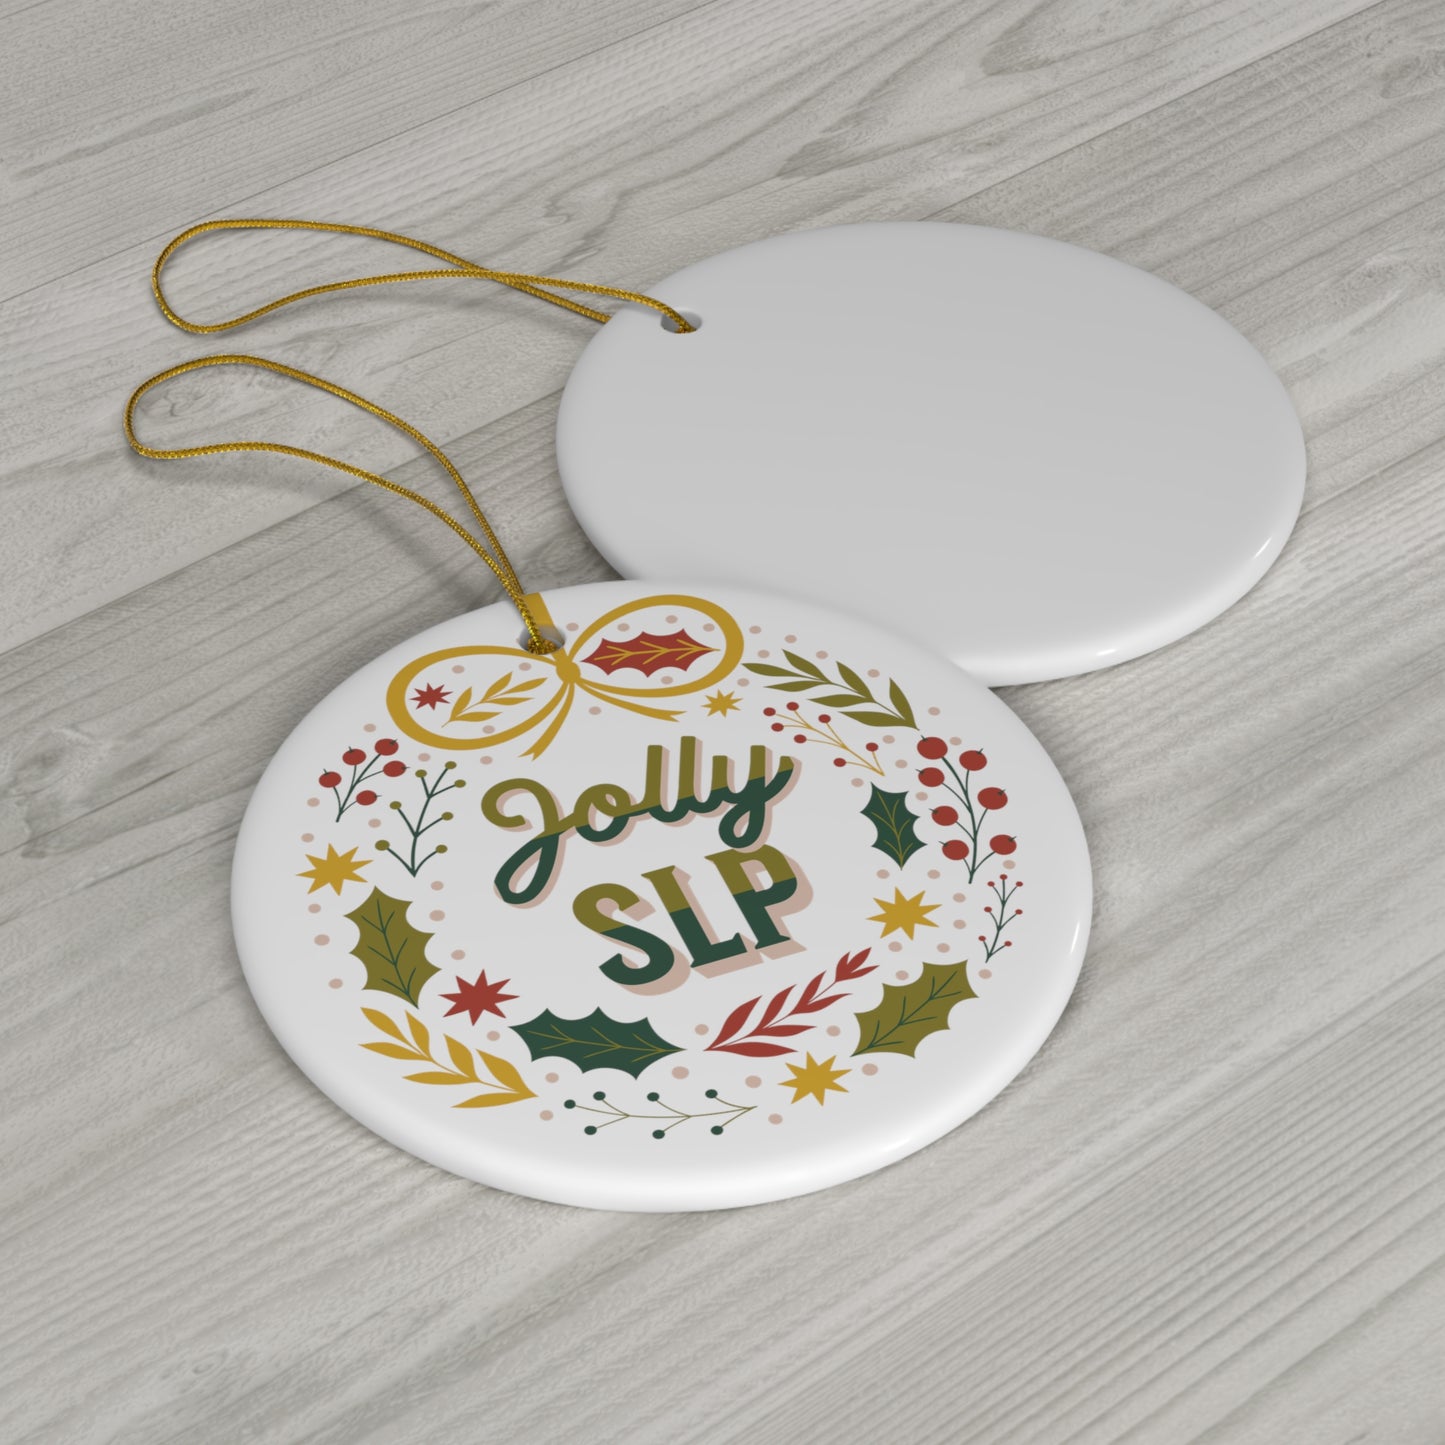 Jolly SLP Christmas Ornament - 4 Material Options